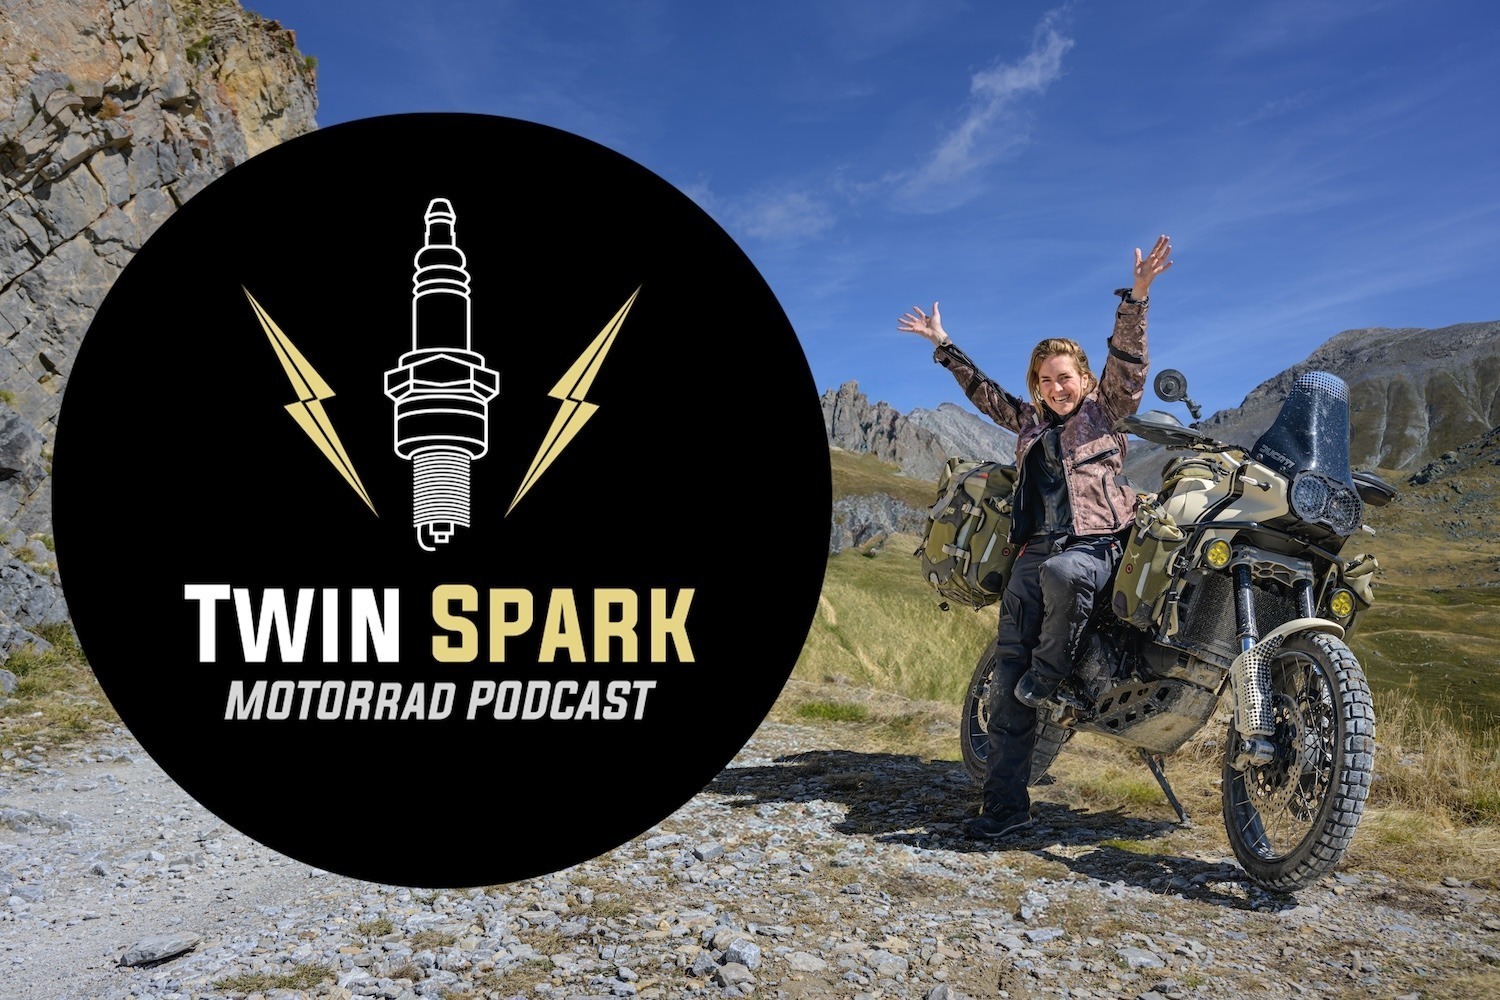 TwinSpark Motorrad Podcast